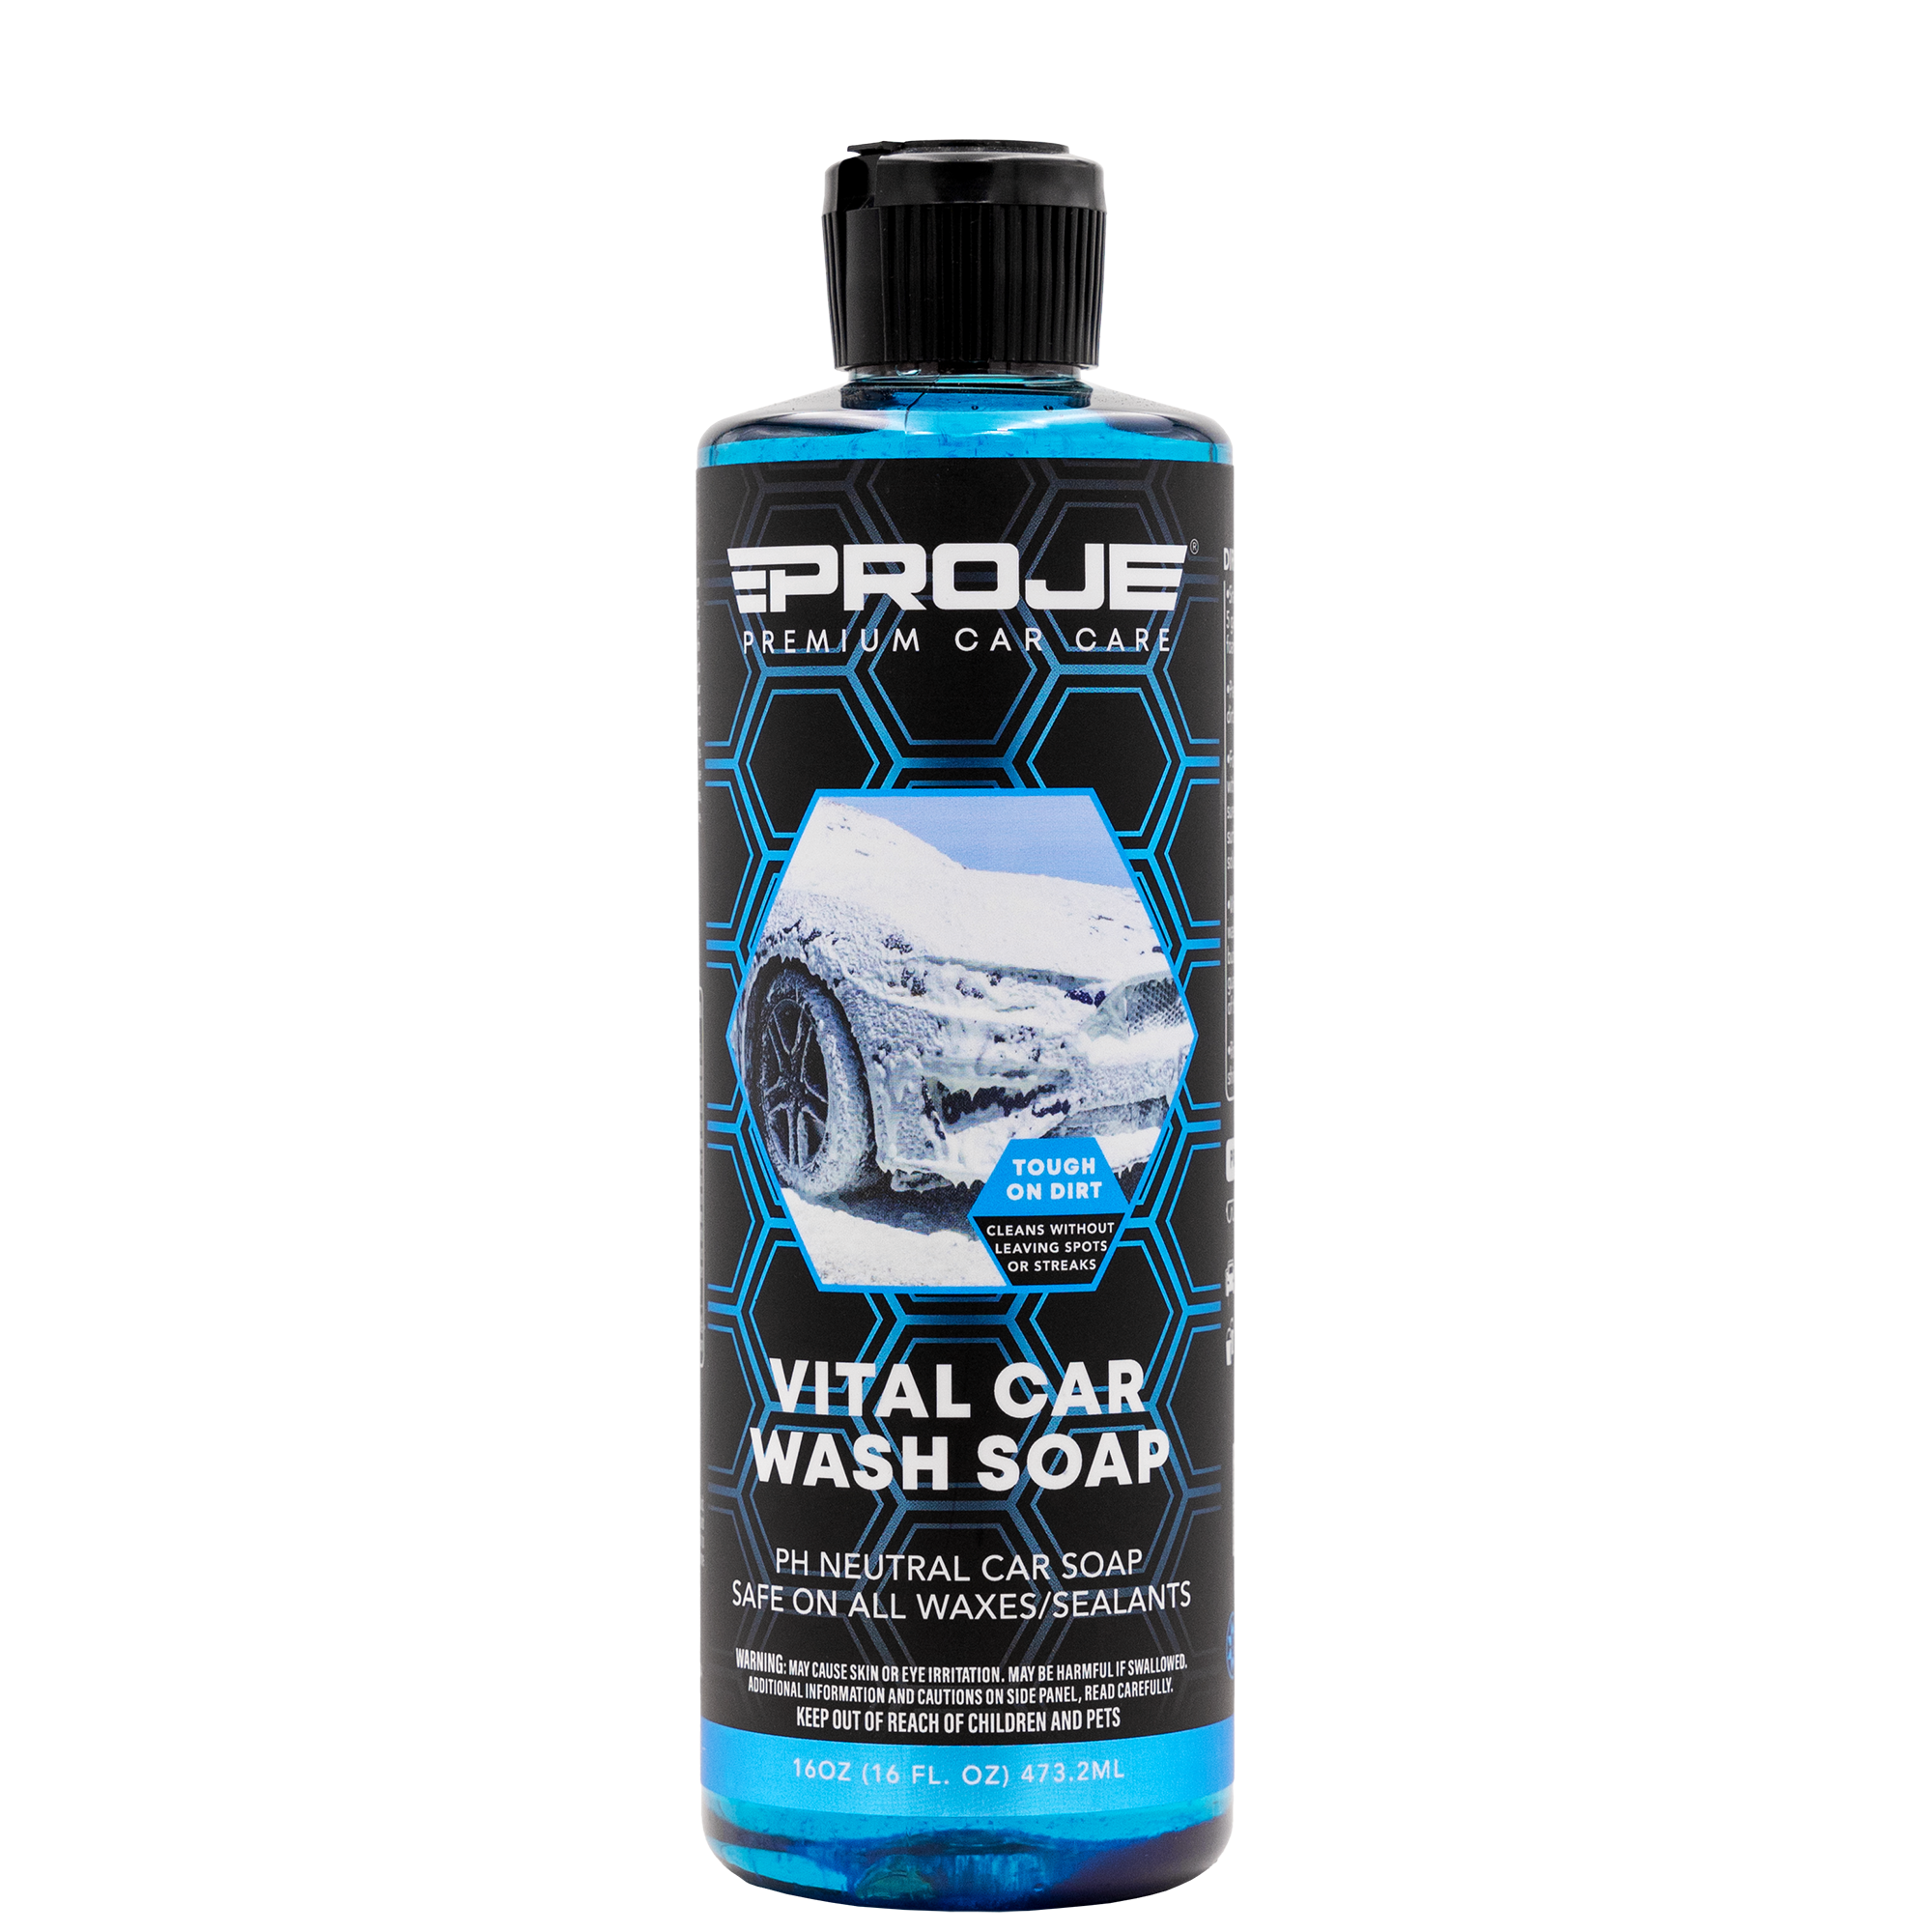 Auto Detailing Supplies: Car Wash Soap